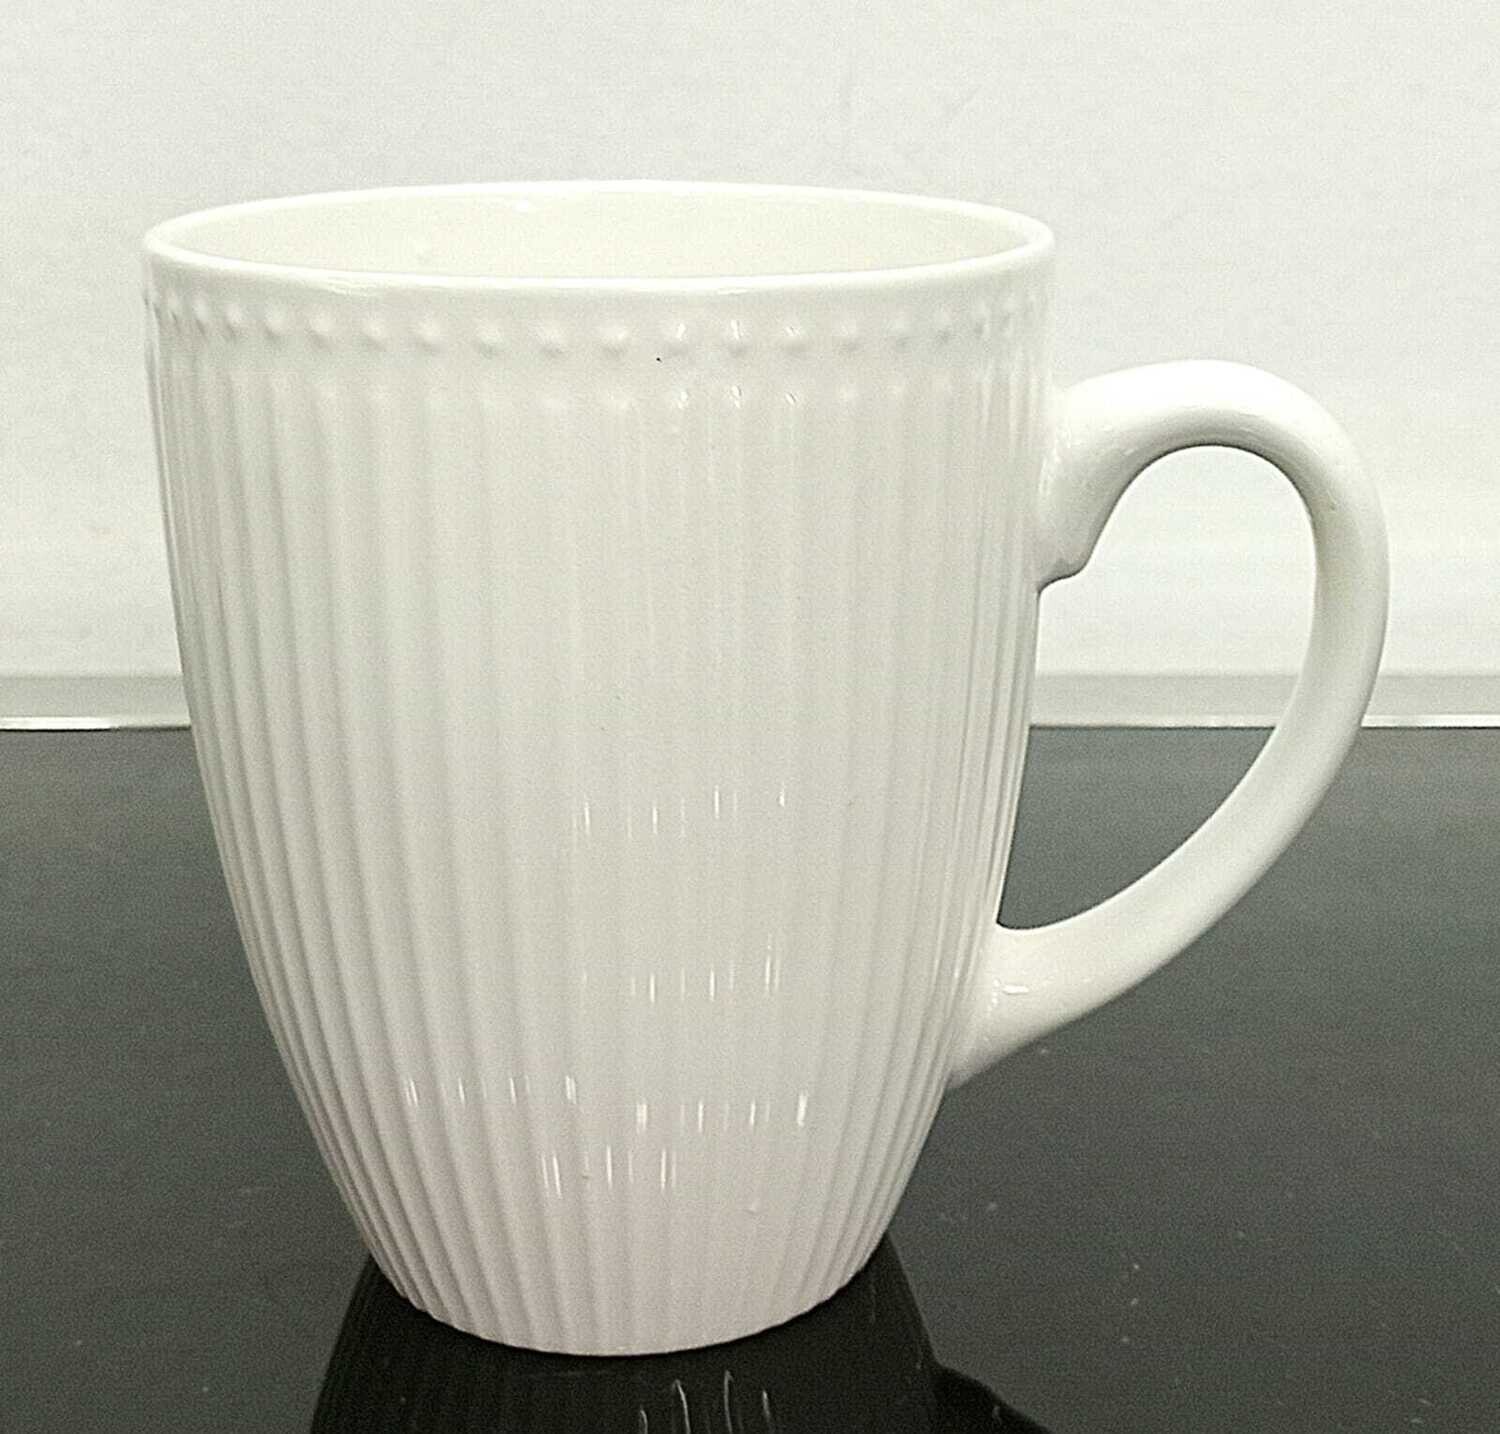 Ceramic Coffee Mugs for office and home Tea cups 1pc White mug #DHRUMAX230210